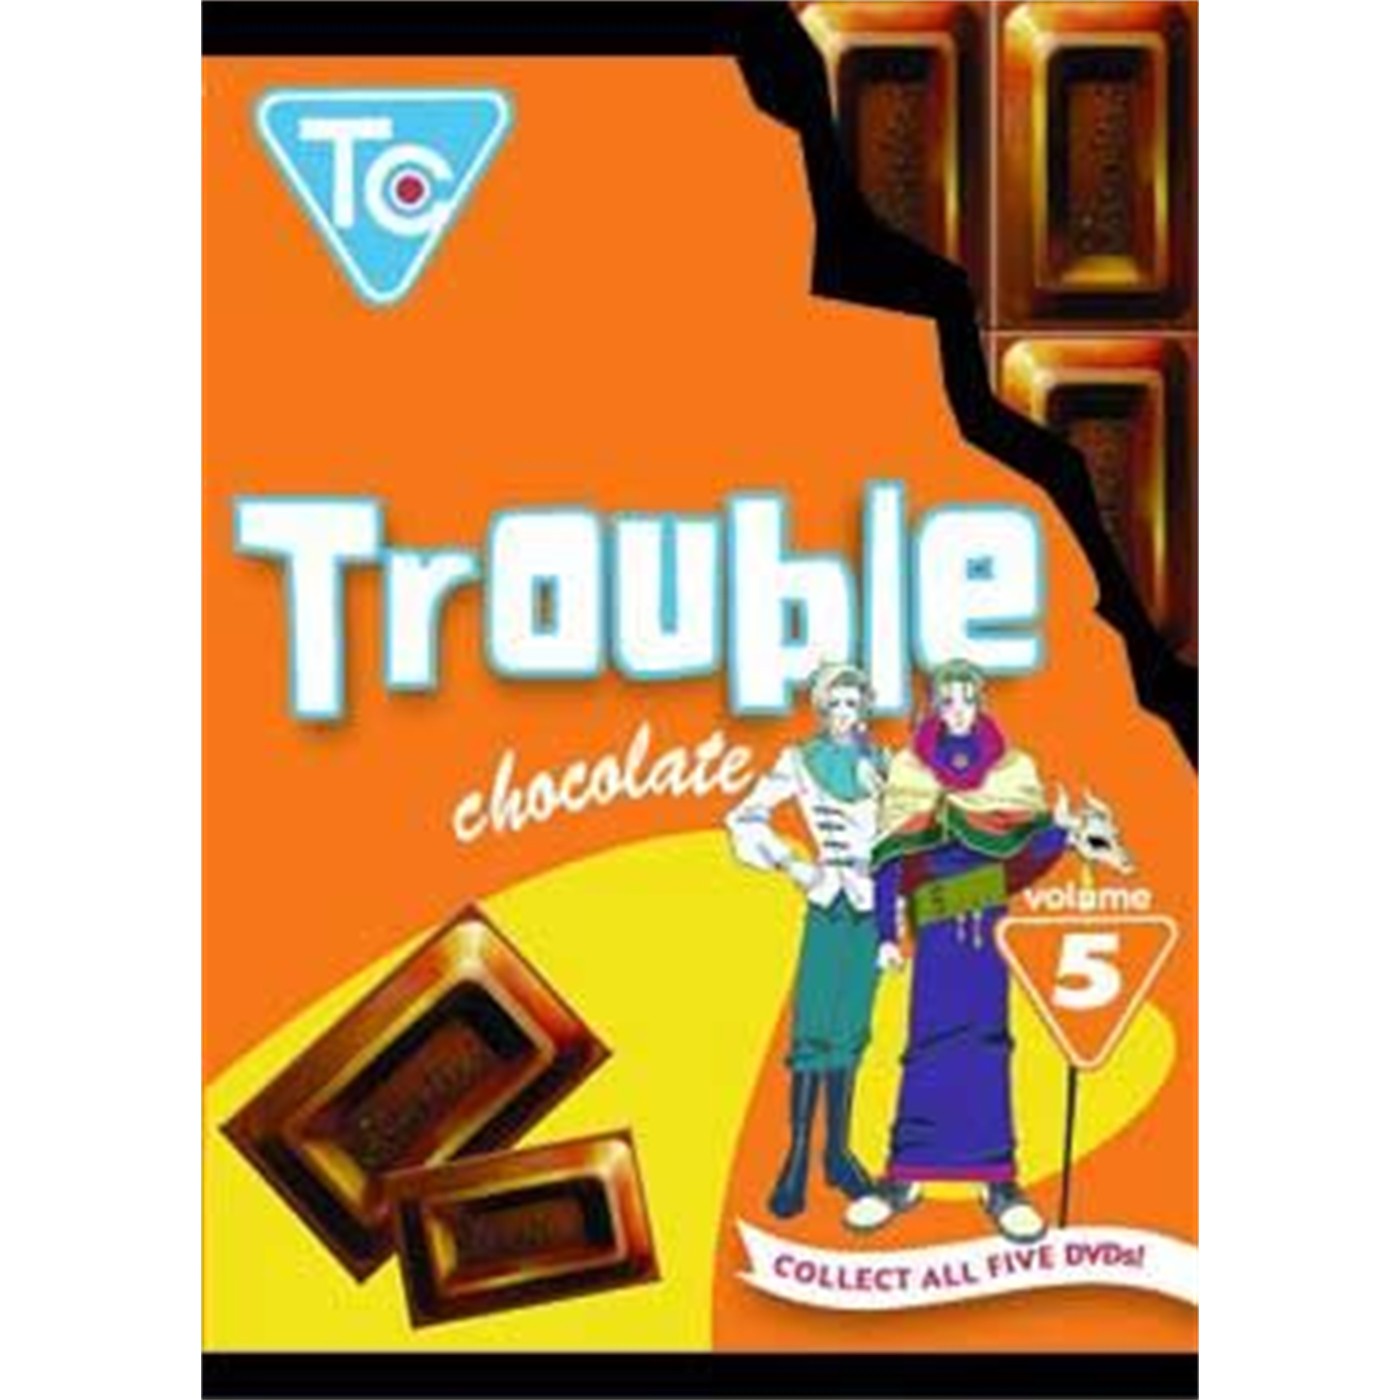 Trouble Chocolate, DVD Vol. 5